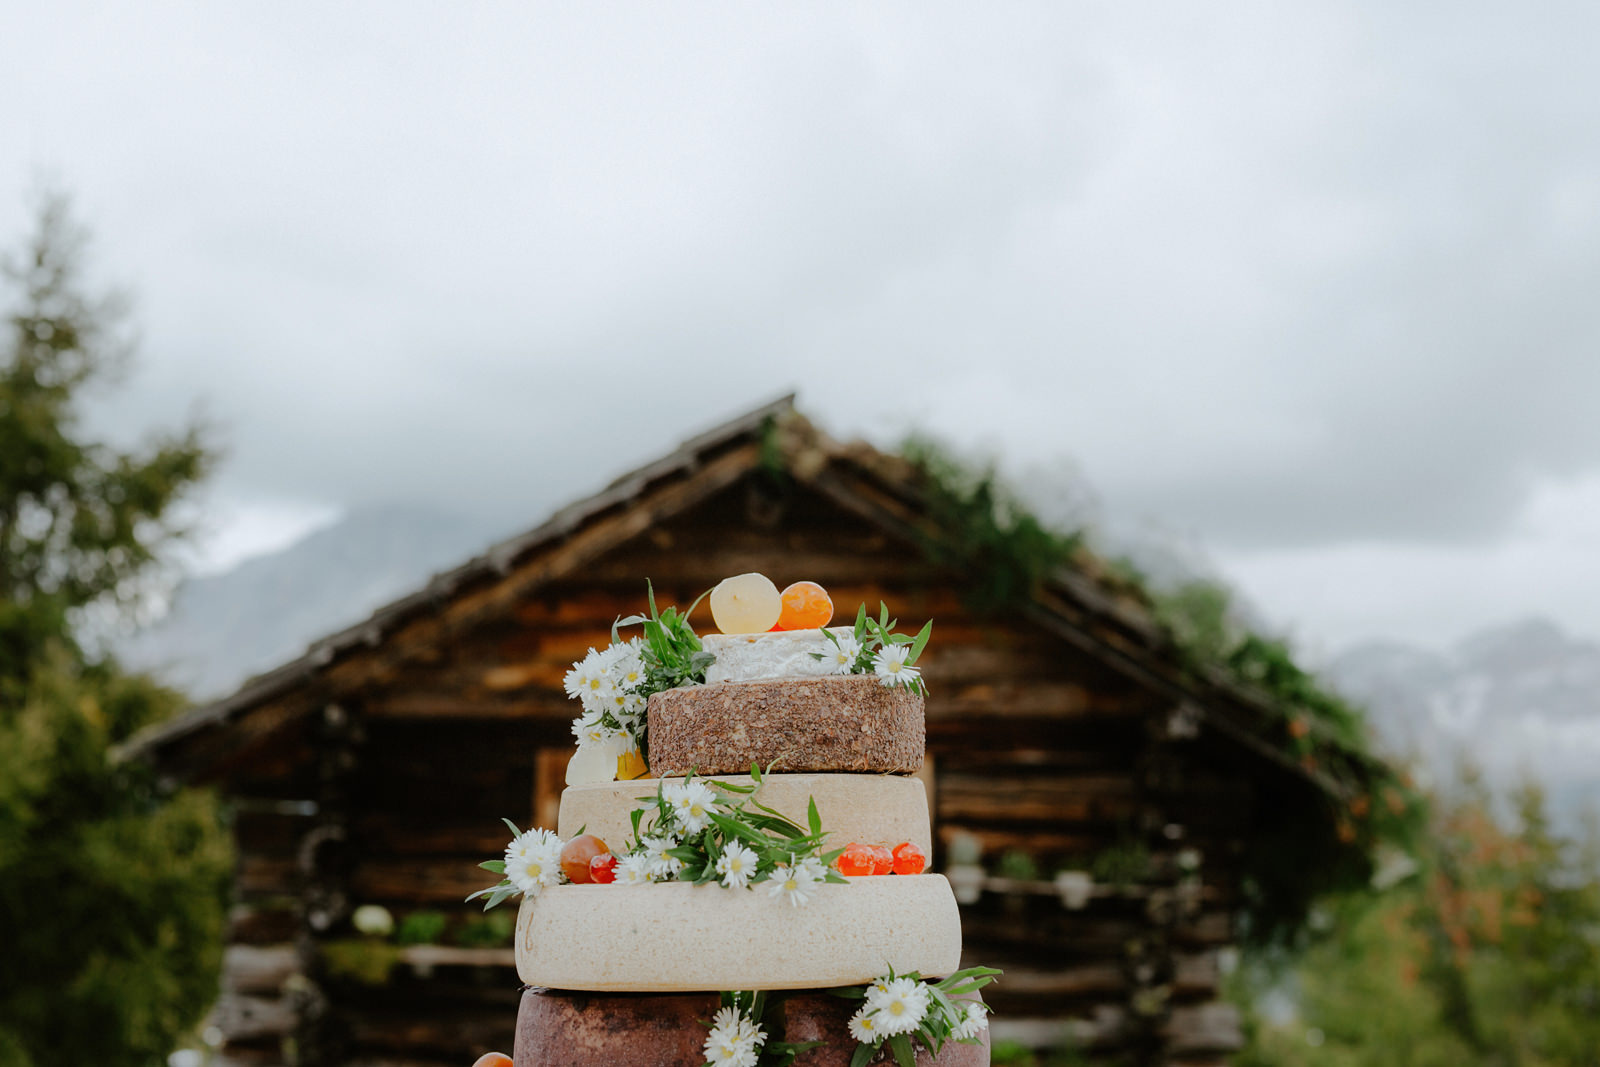 Cheese wedding cake